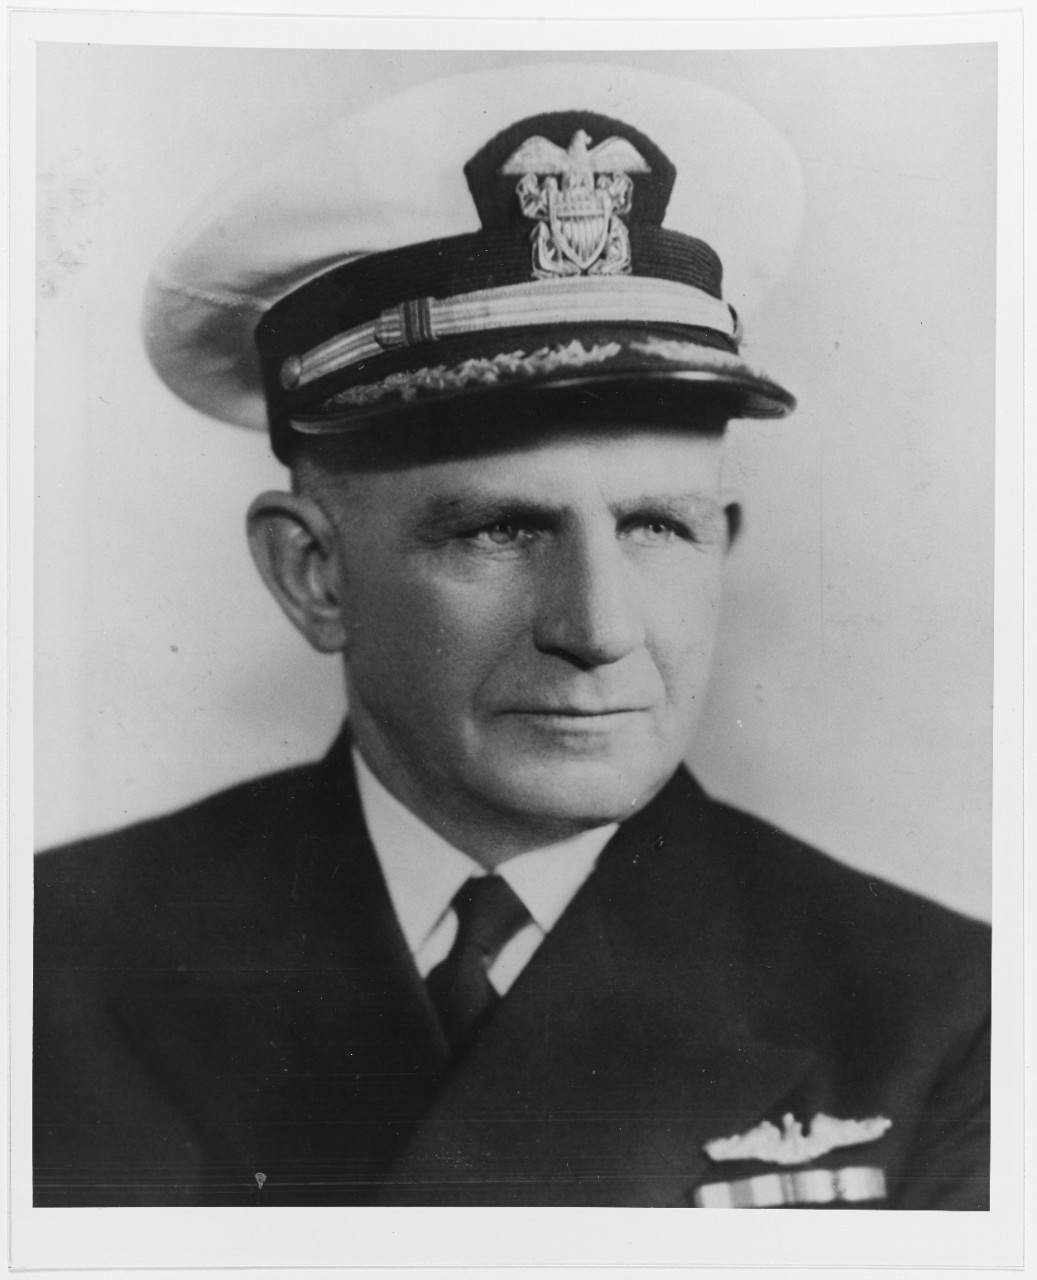 Captain Frank P. Thomas, USN